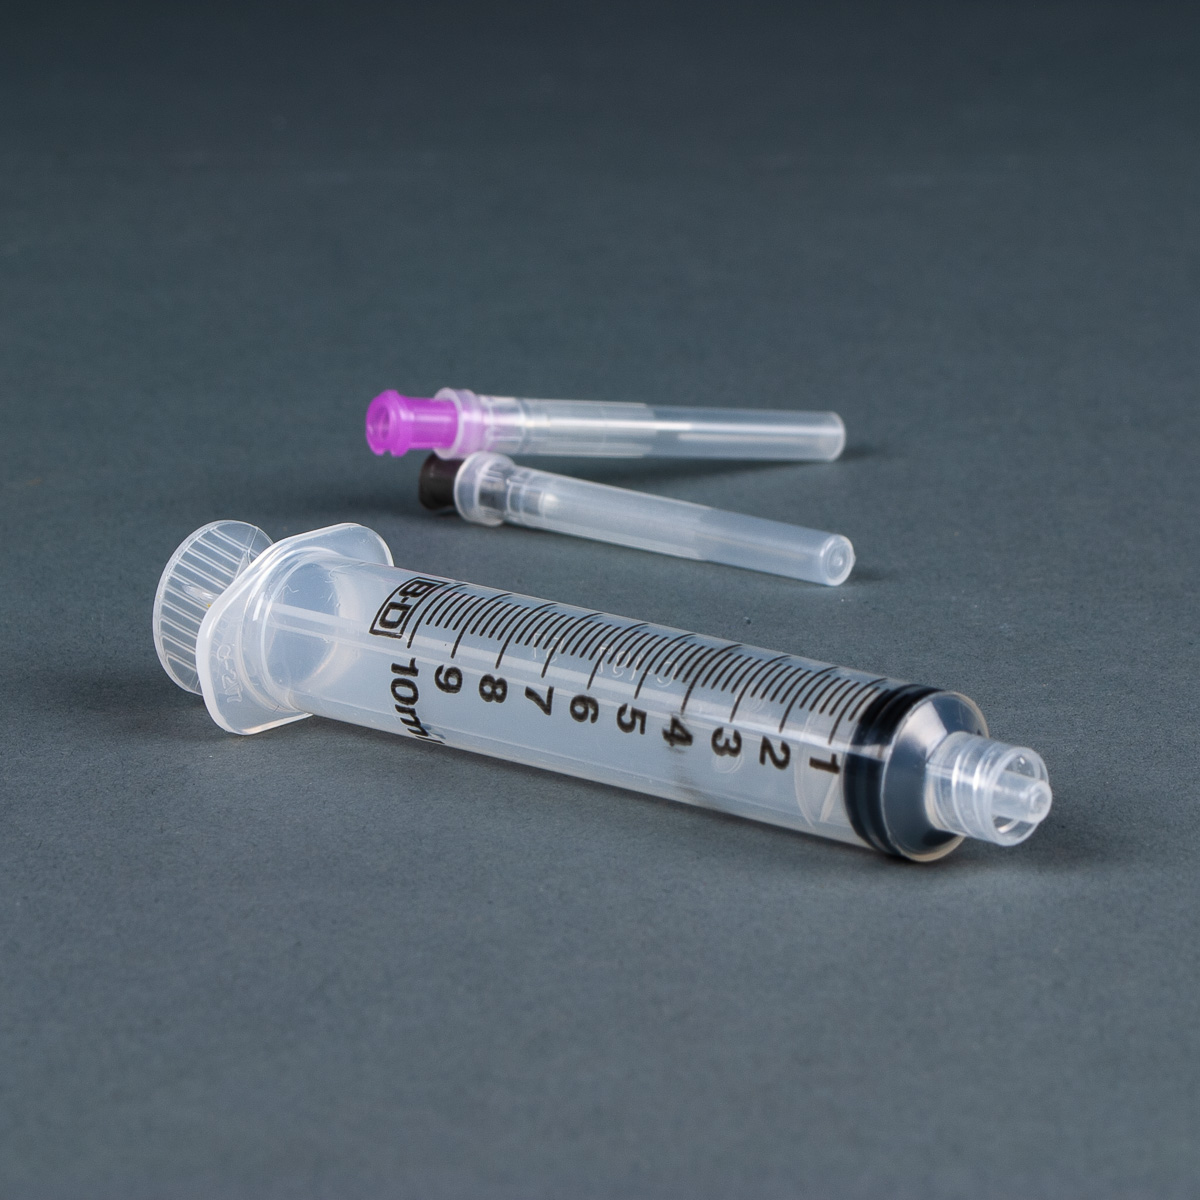 10 CC syringe applicator